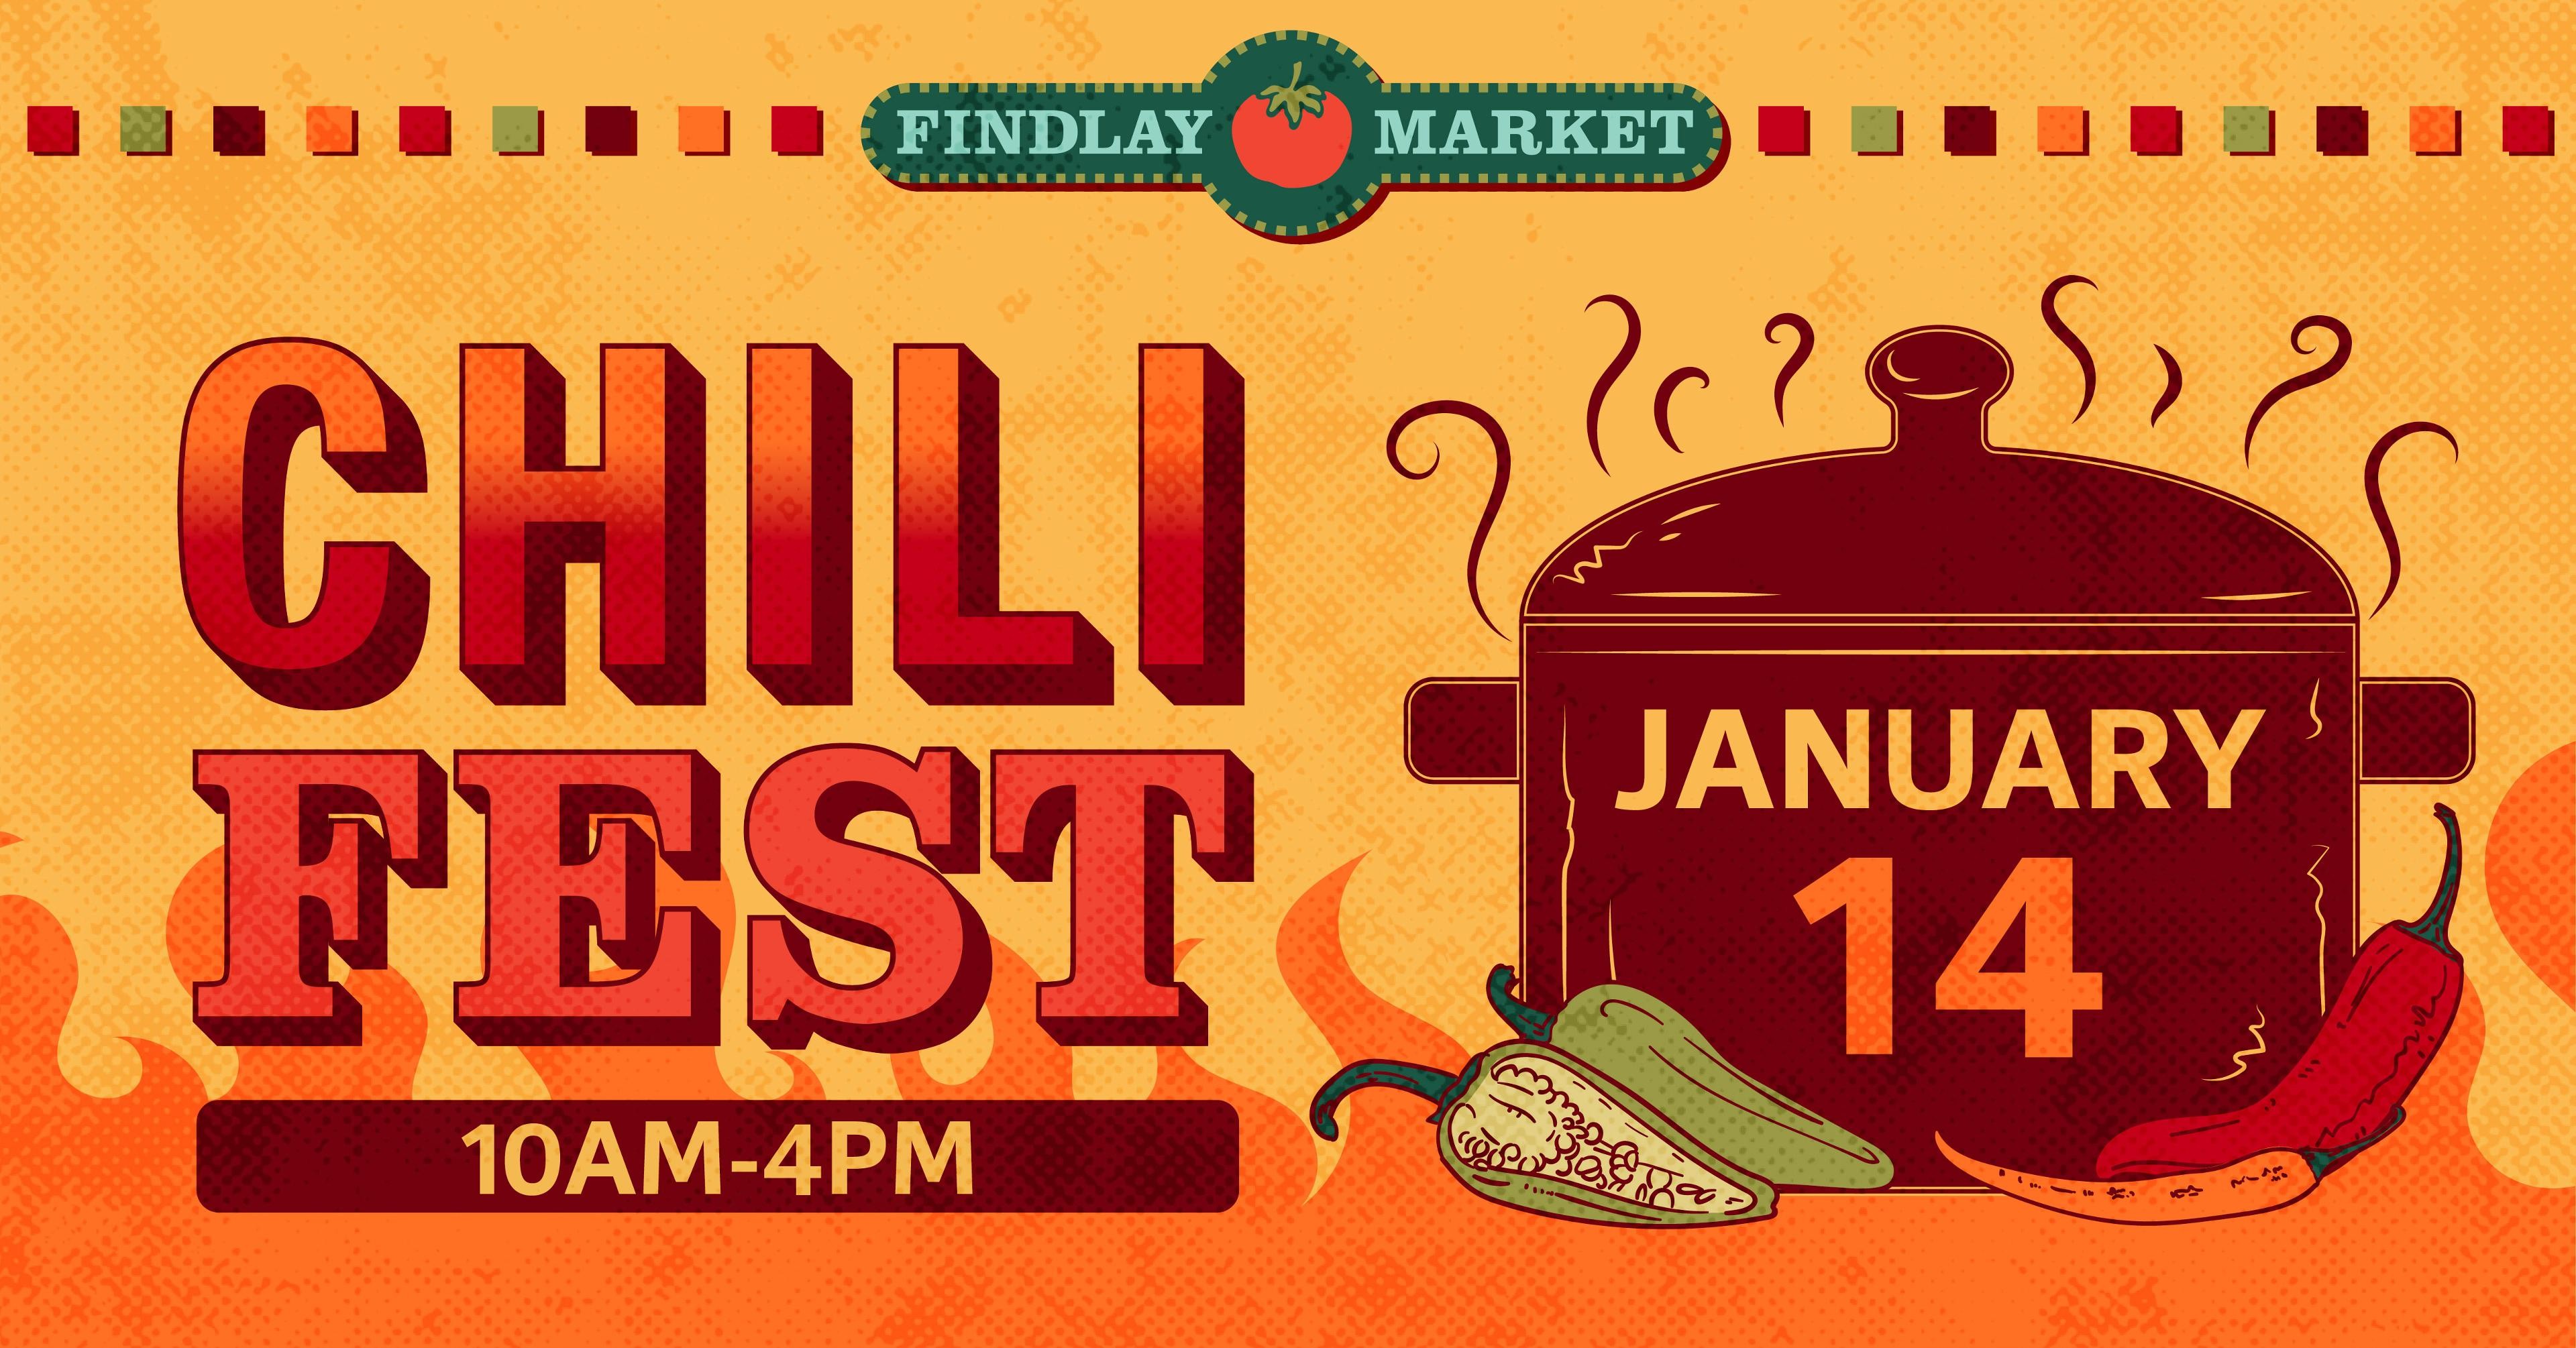 Chili Fest Findlay Market Food & Drink Cincinnati CityBeat